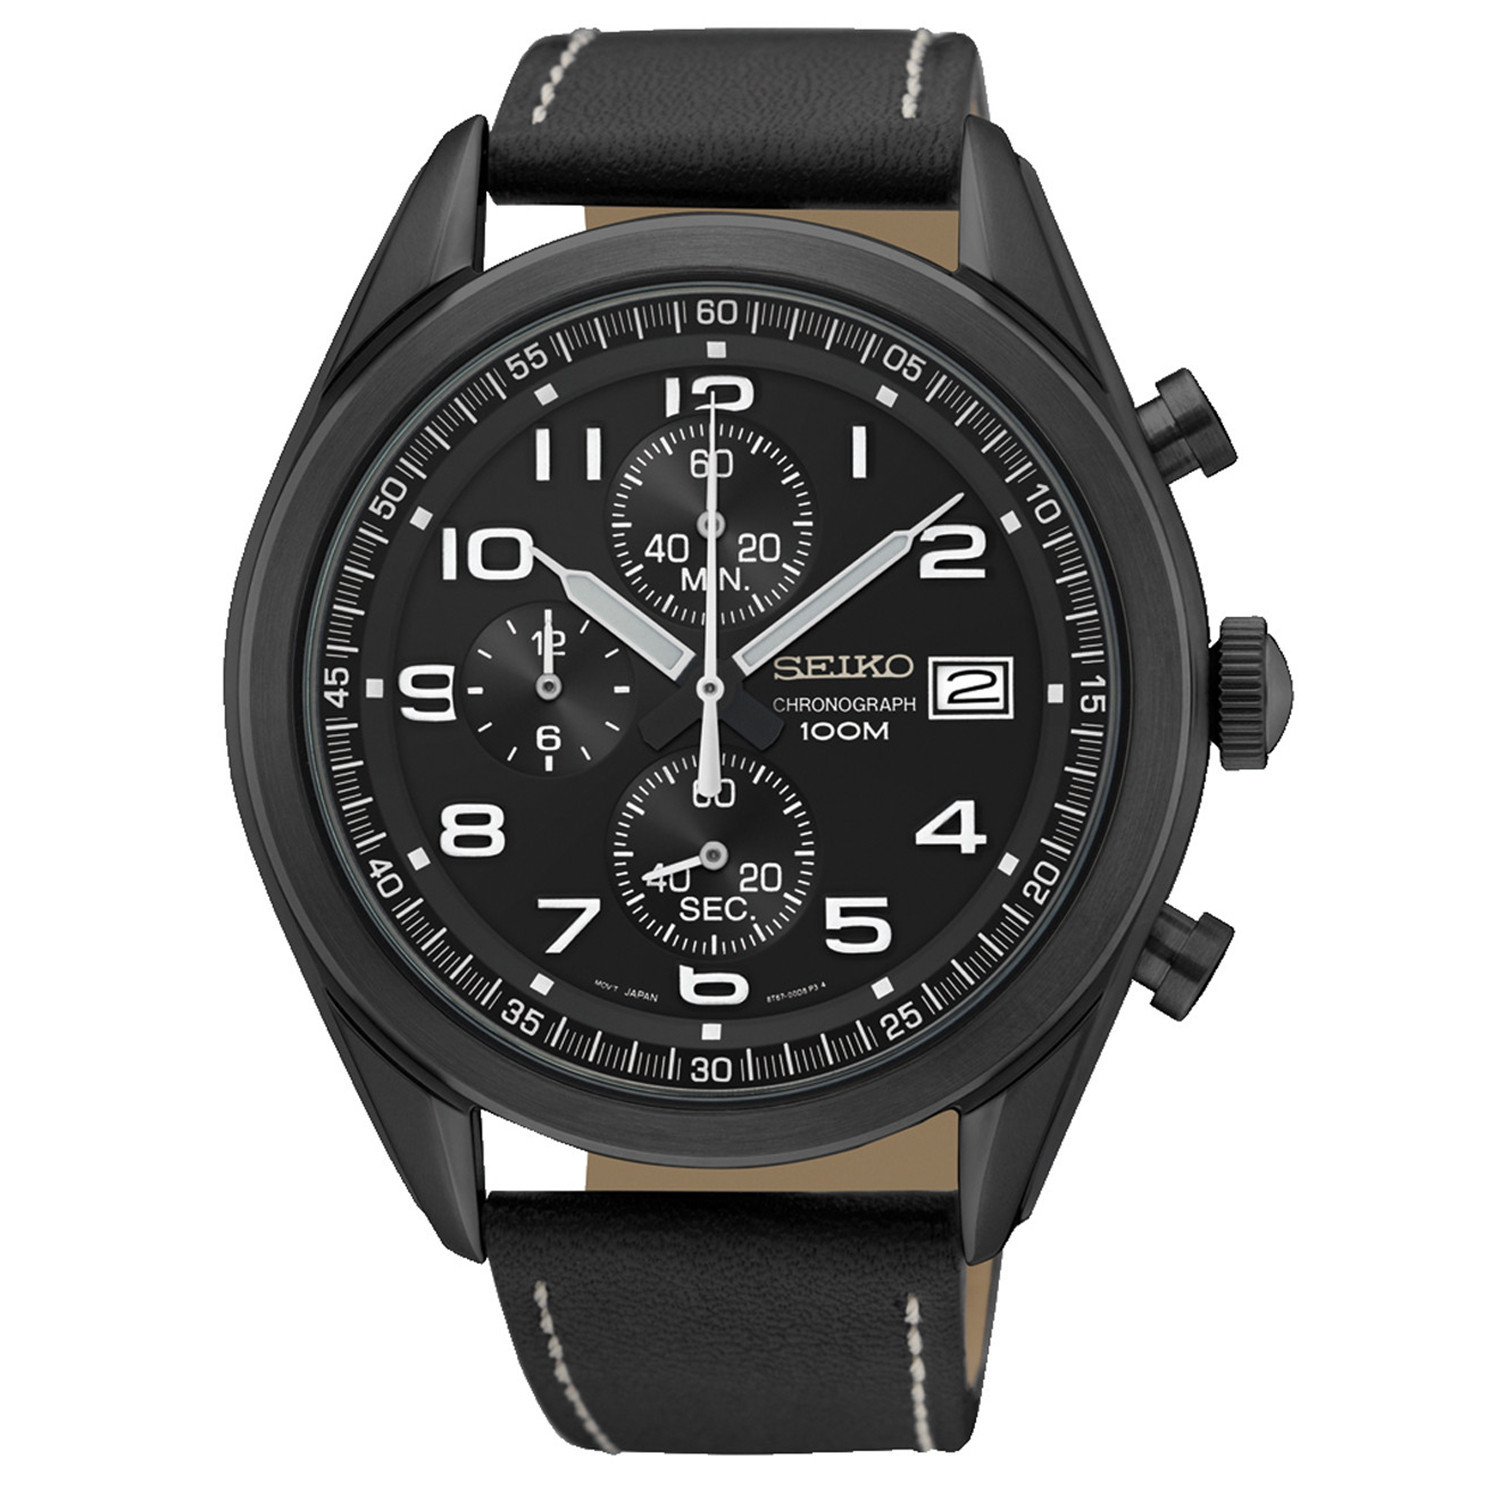 Montre Seiko sport chronographe cuir noir SSB277P1